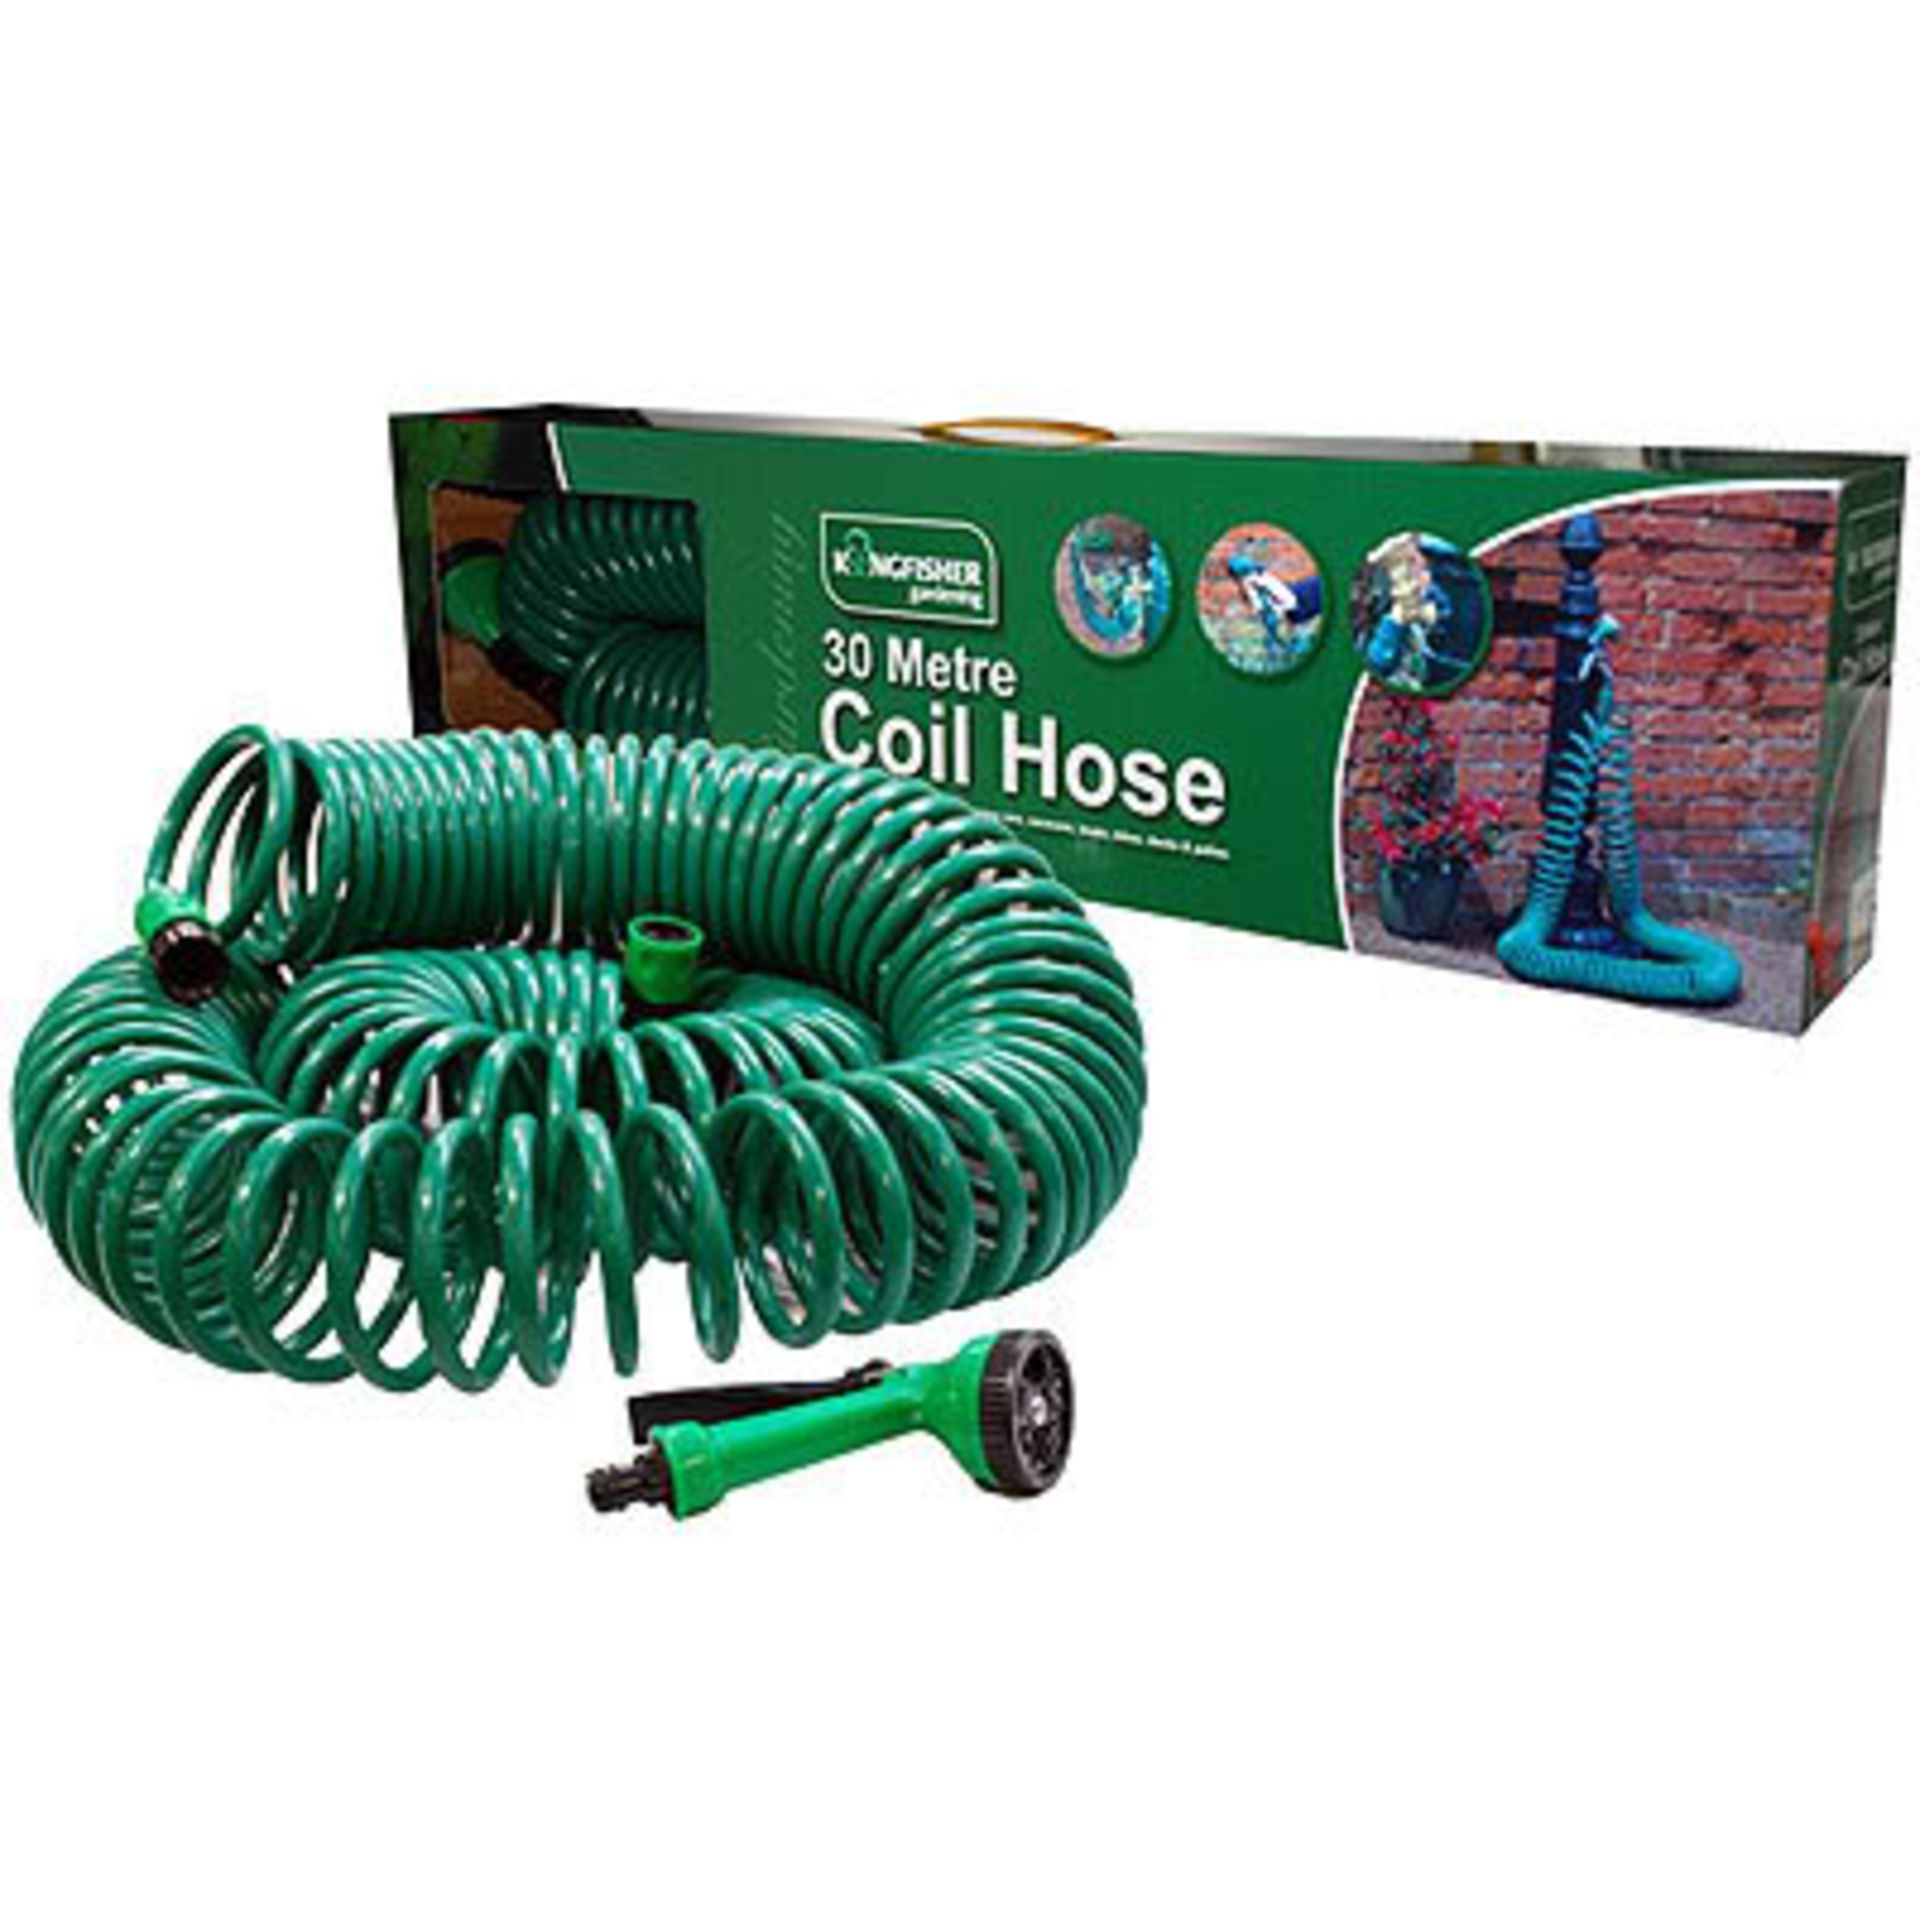 30 Metre Coil Hose With Nozzle And Tap Connectors Etc